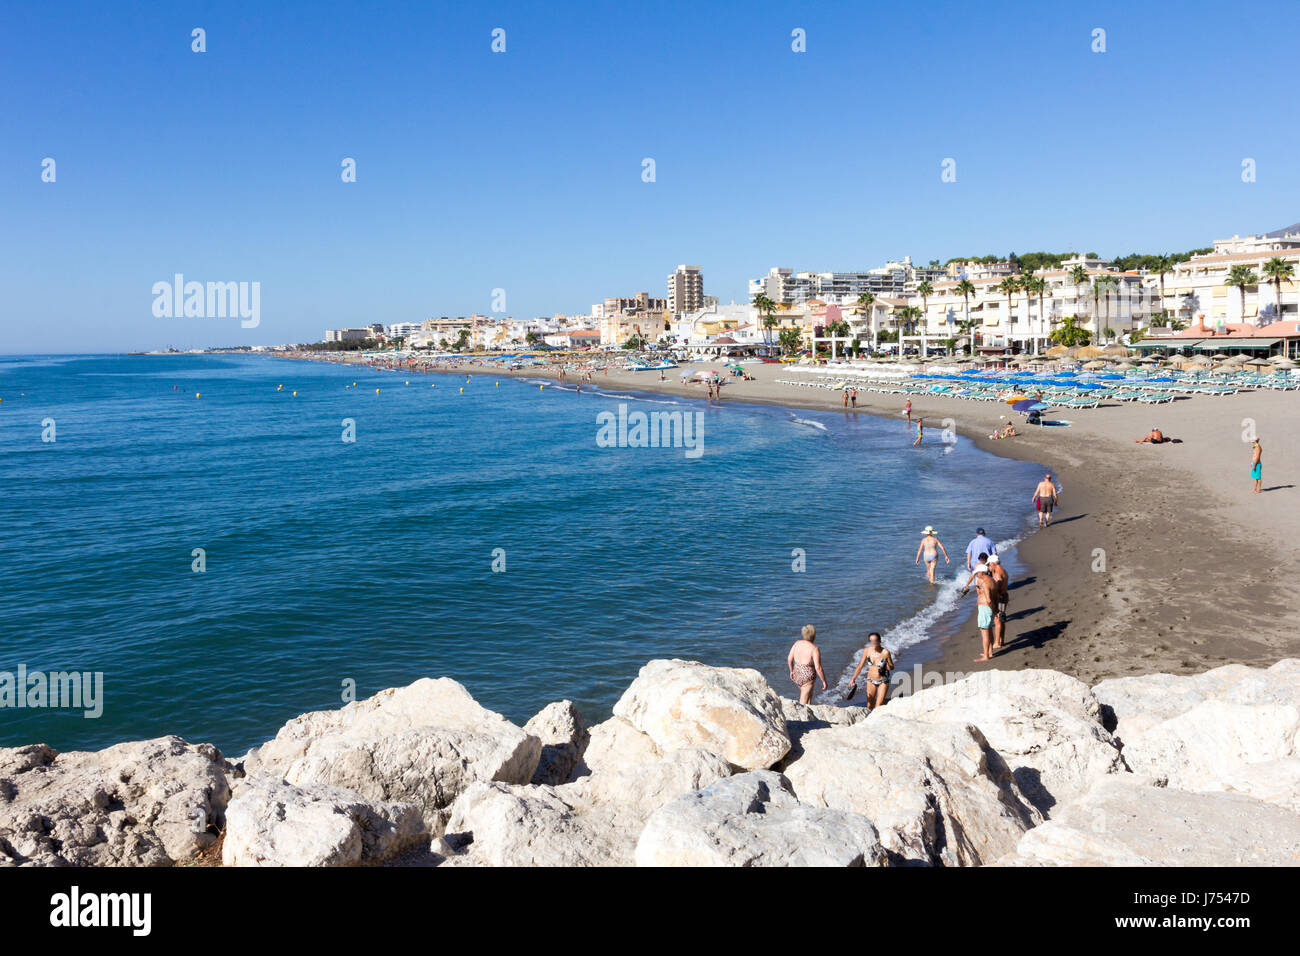 Spiaggia di Carihuela, Torremolinos, Spagna in una giornata di sole Foto Stock